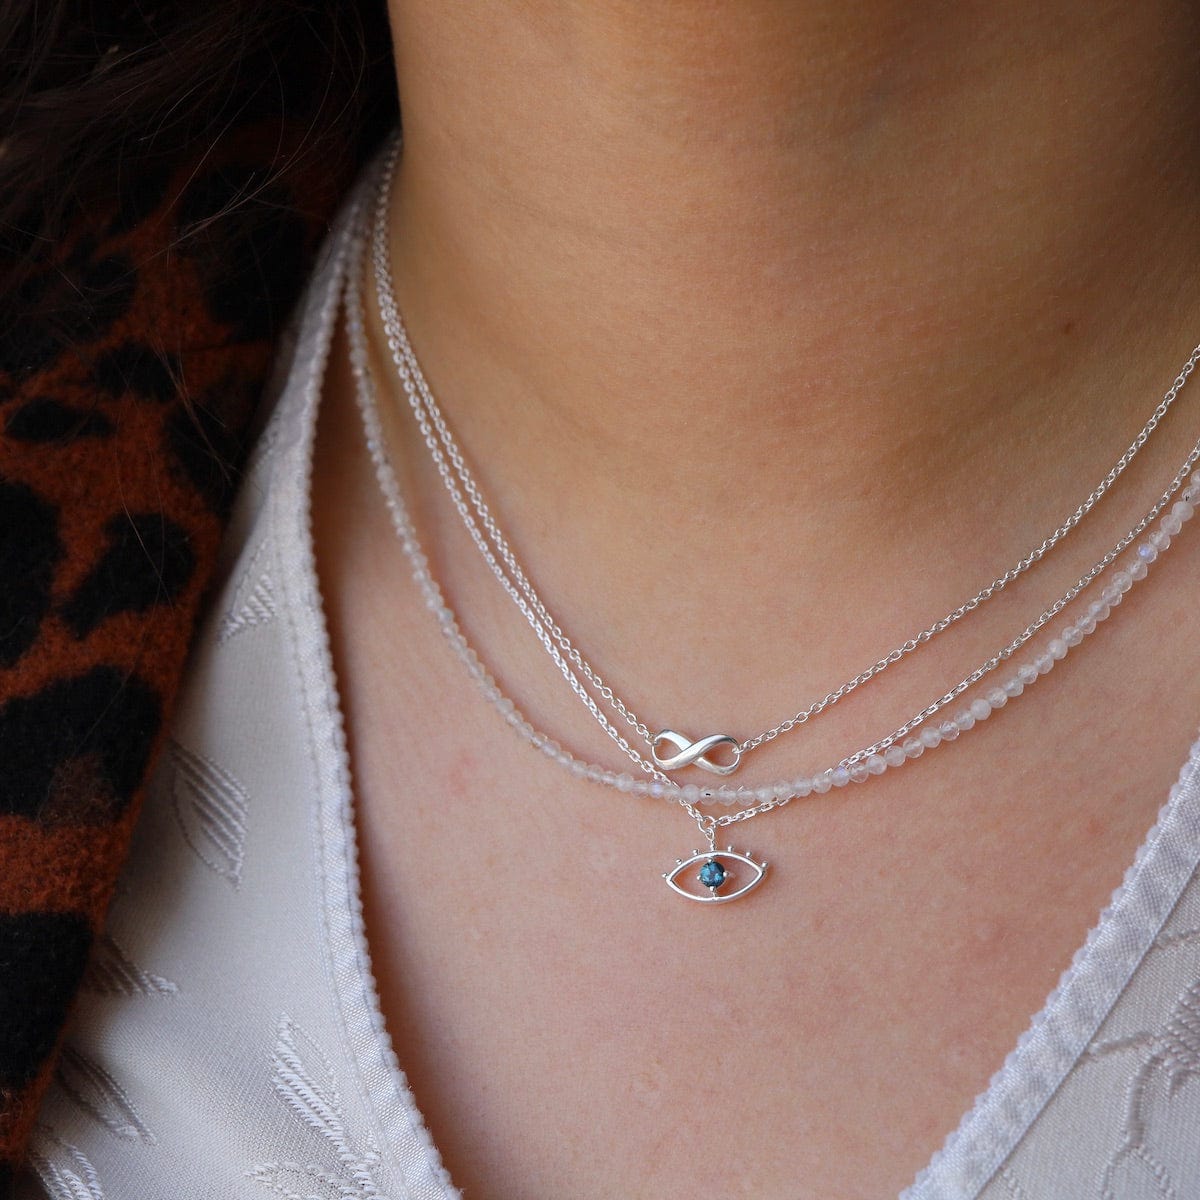 NKL Infinity Symbol Necklace - Sterling Silver